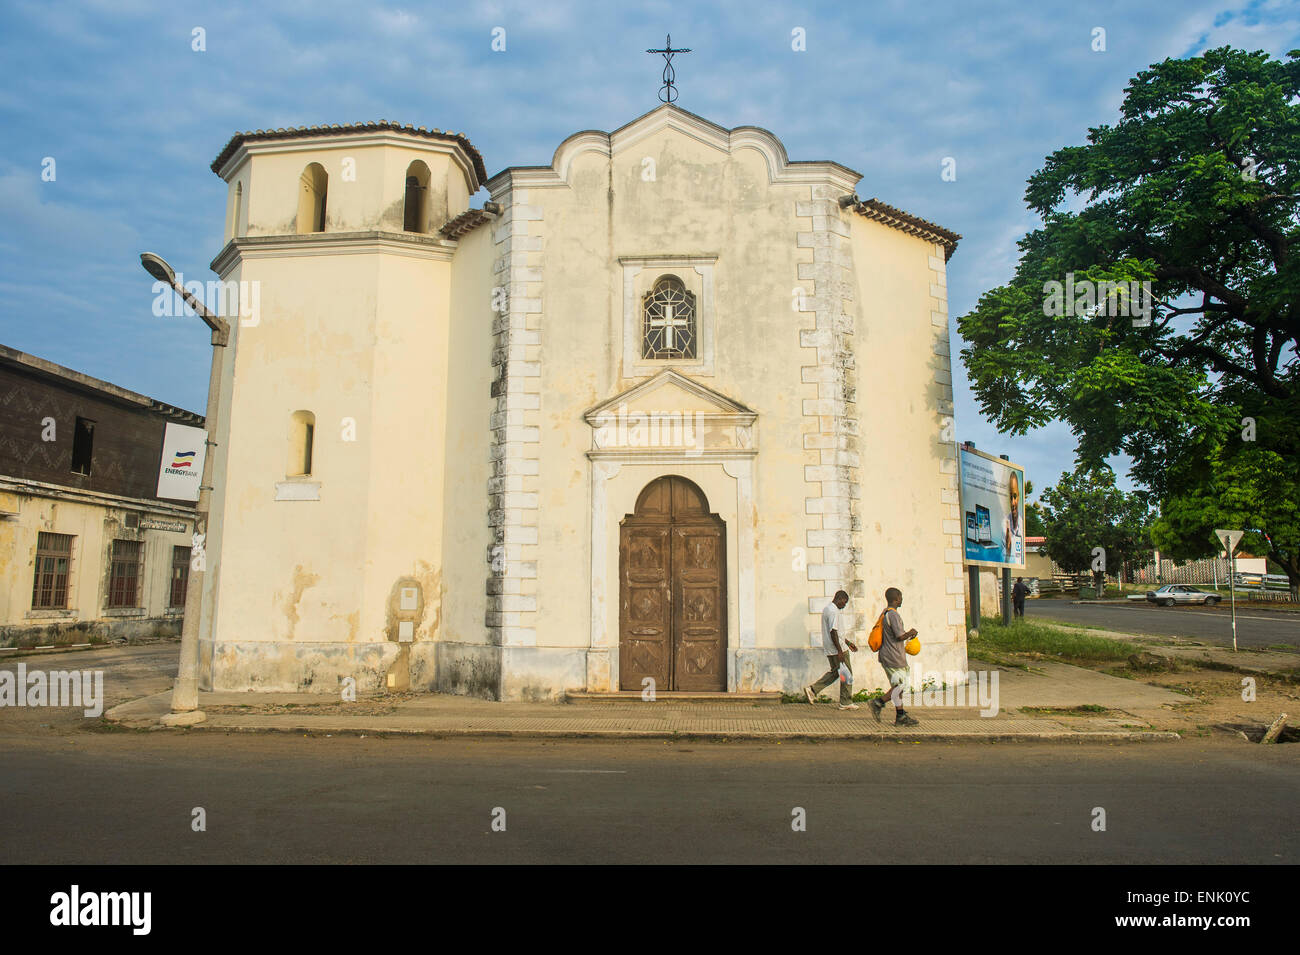 City of Sao Tome, Sao Tome and Principe, Atlantic Ocean, Africa Stock Photo